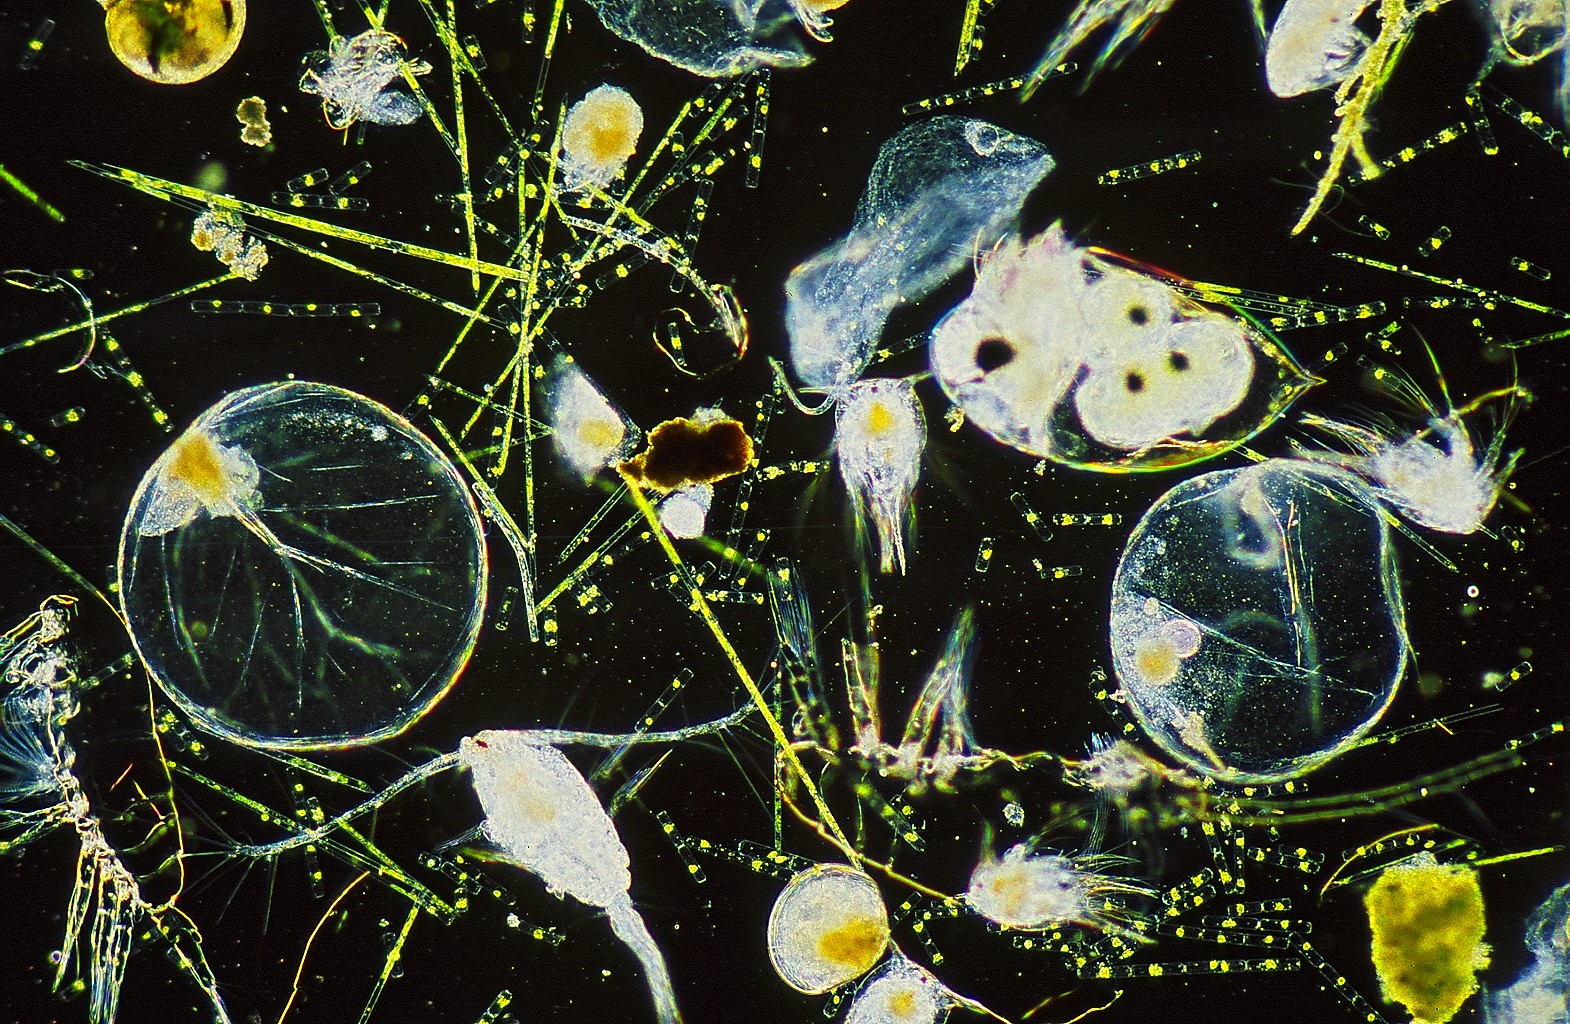 Фитопланктон в океане. Зоопланктон и фитопланктон. Фитопланктон нанопланктон зоопланктон. Одноклеточный планктон.